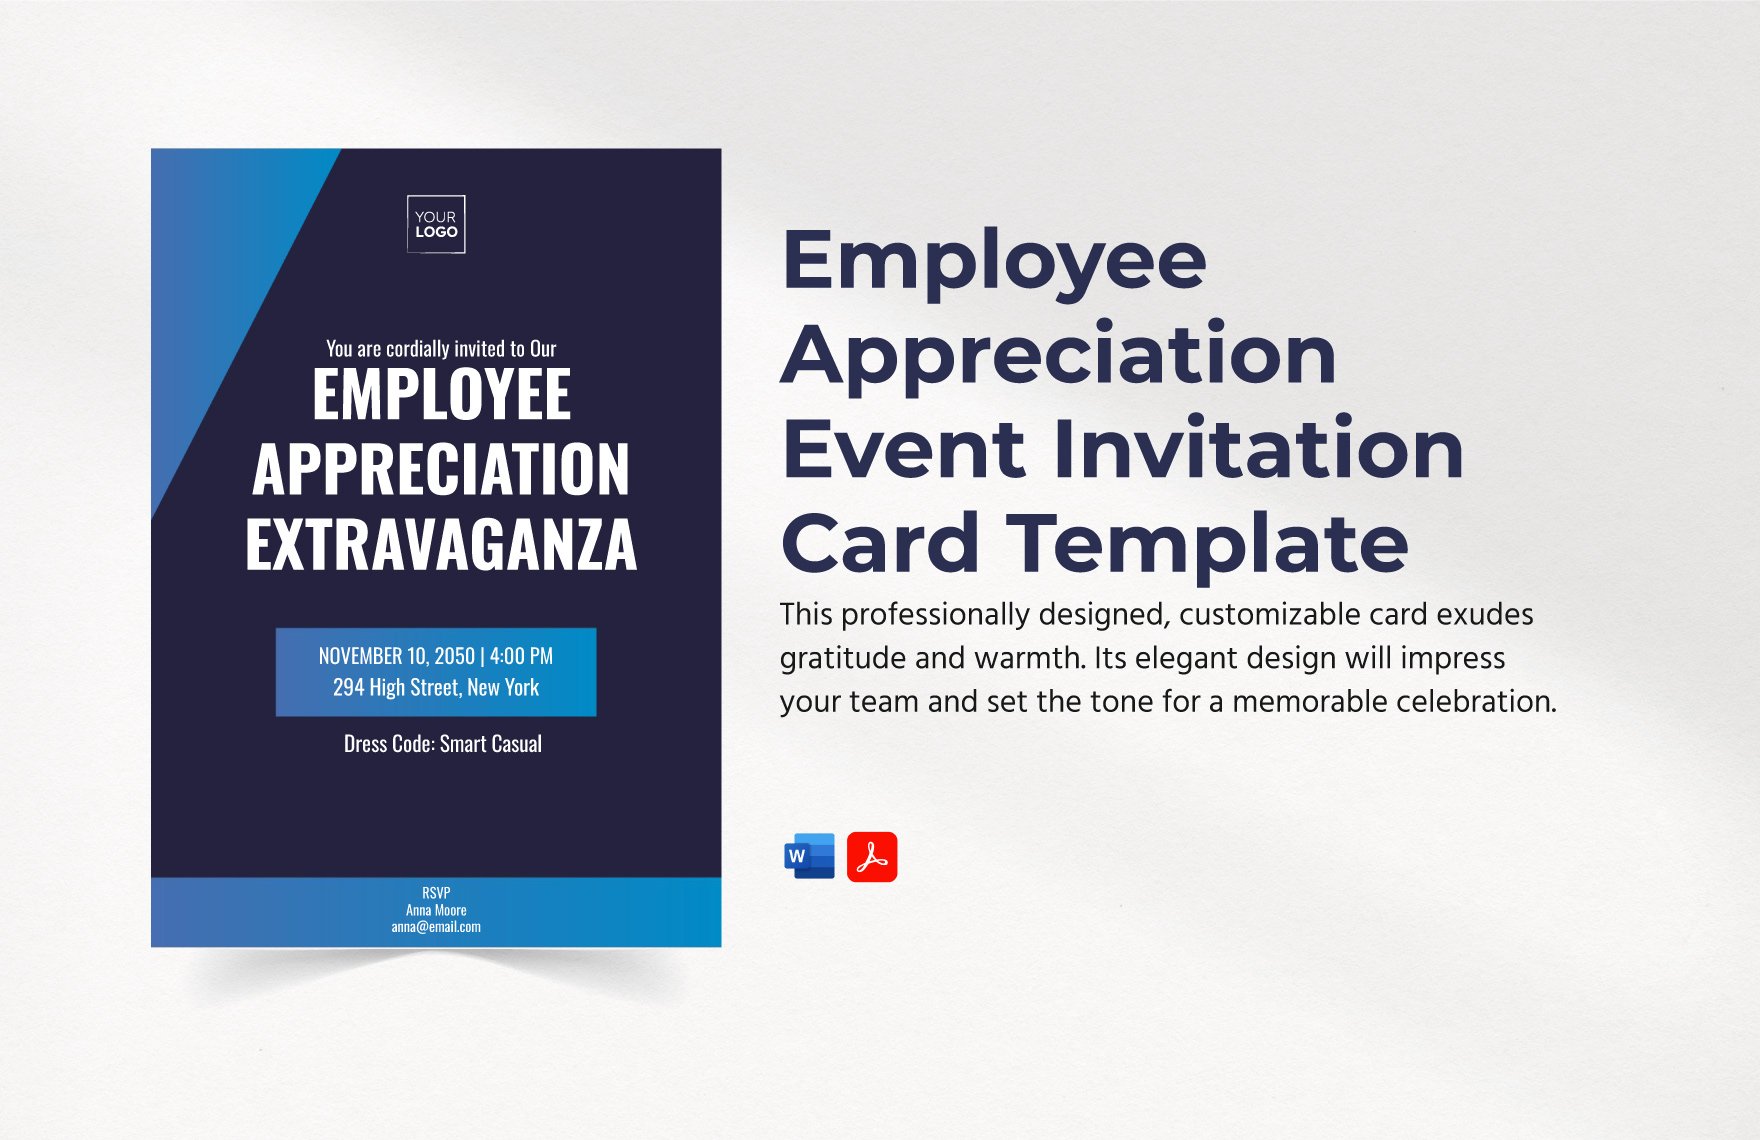 Employee Appreciation Event Invitation Card Template